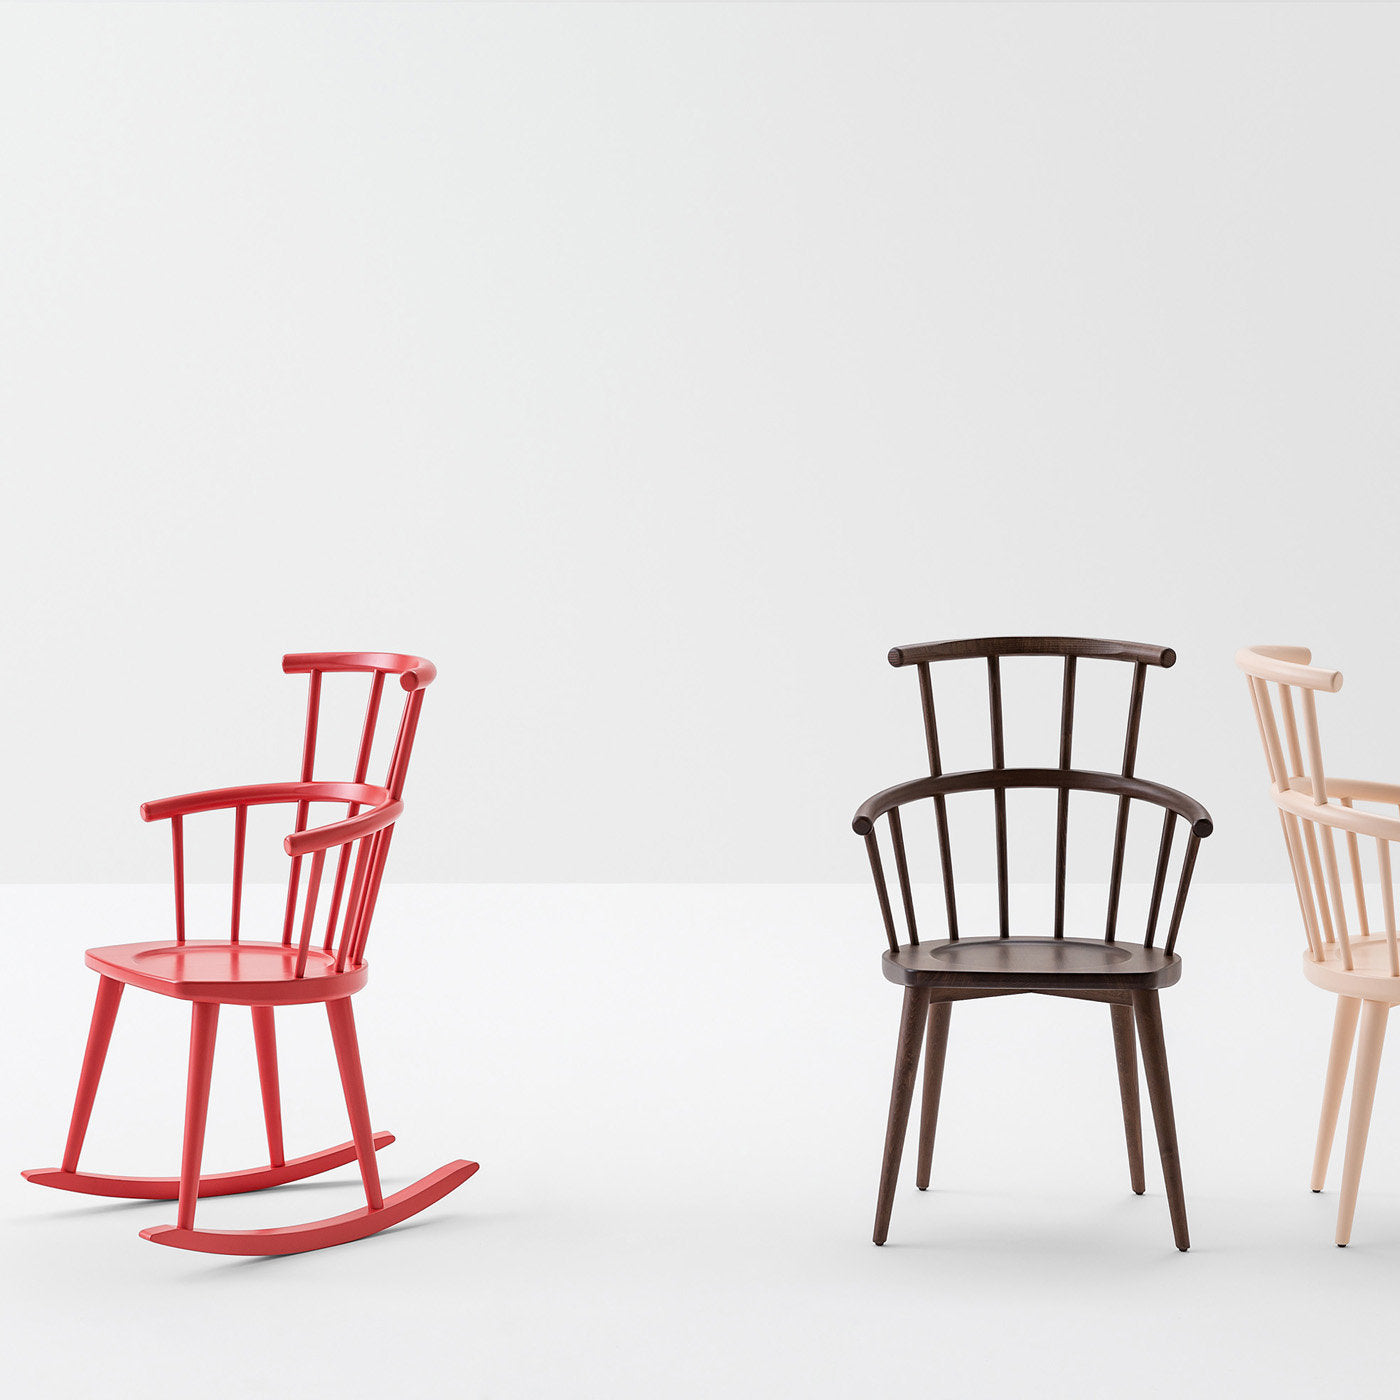 W. Chair by Fabrizio Gallinaro #1 - Alternative view 2